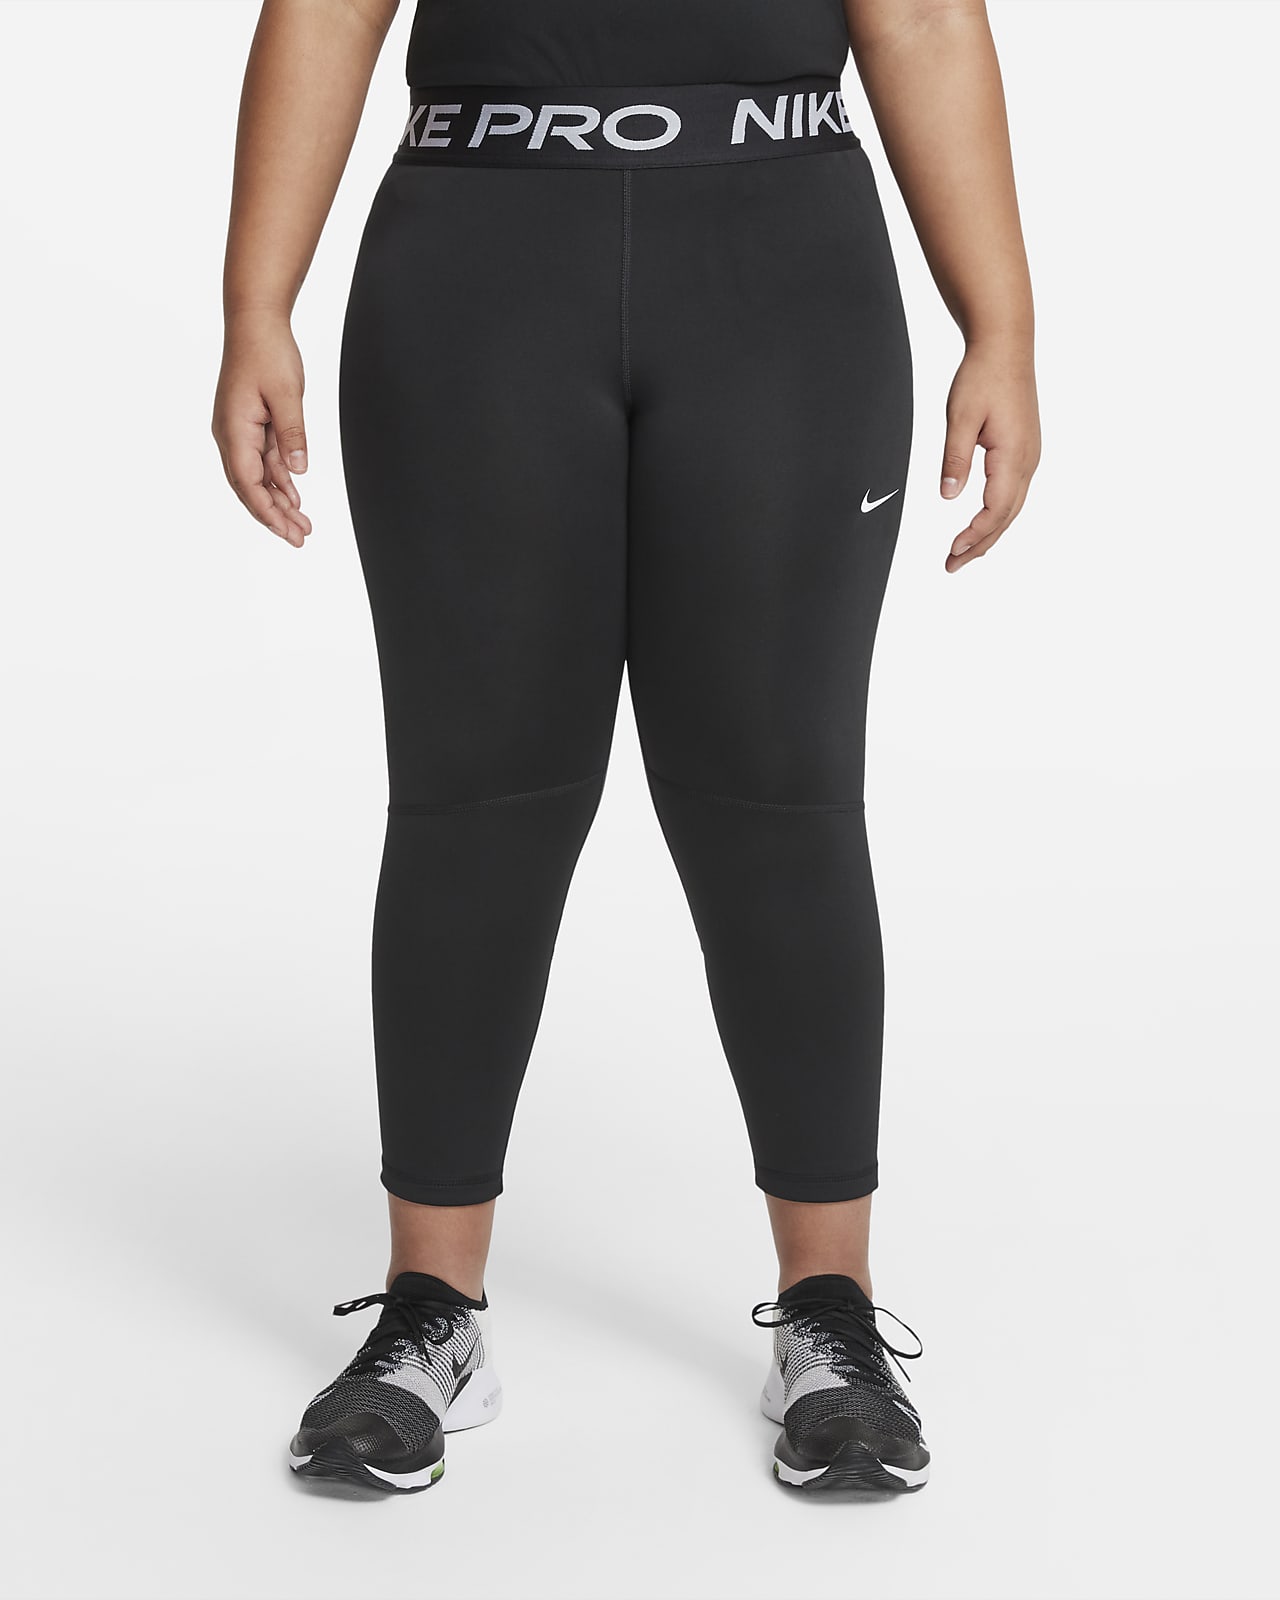 Específico Oferta de trabajo caldera Leggings capris para niña talla grande (talla extendida) Nike Pro Dri-FIT.  Nike.com